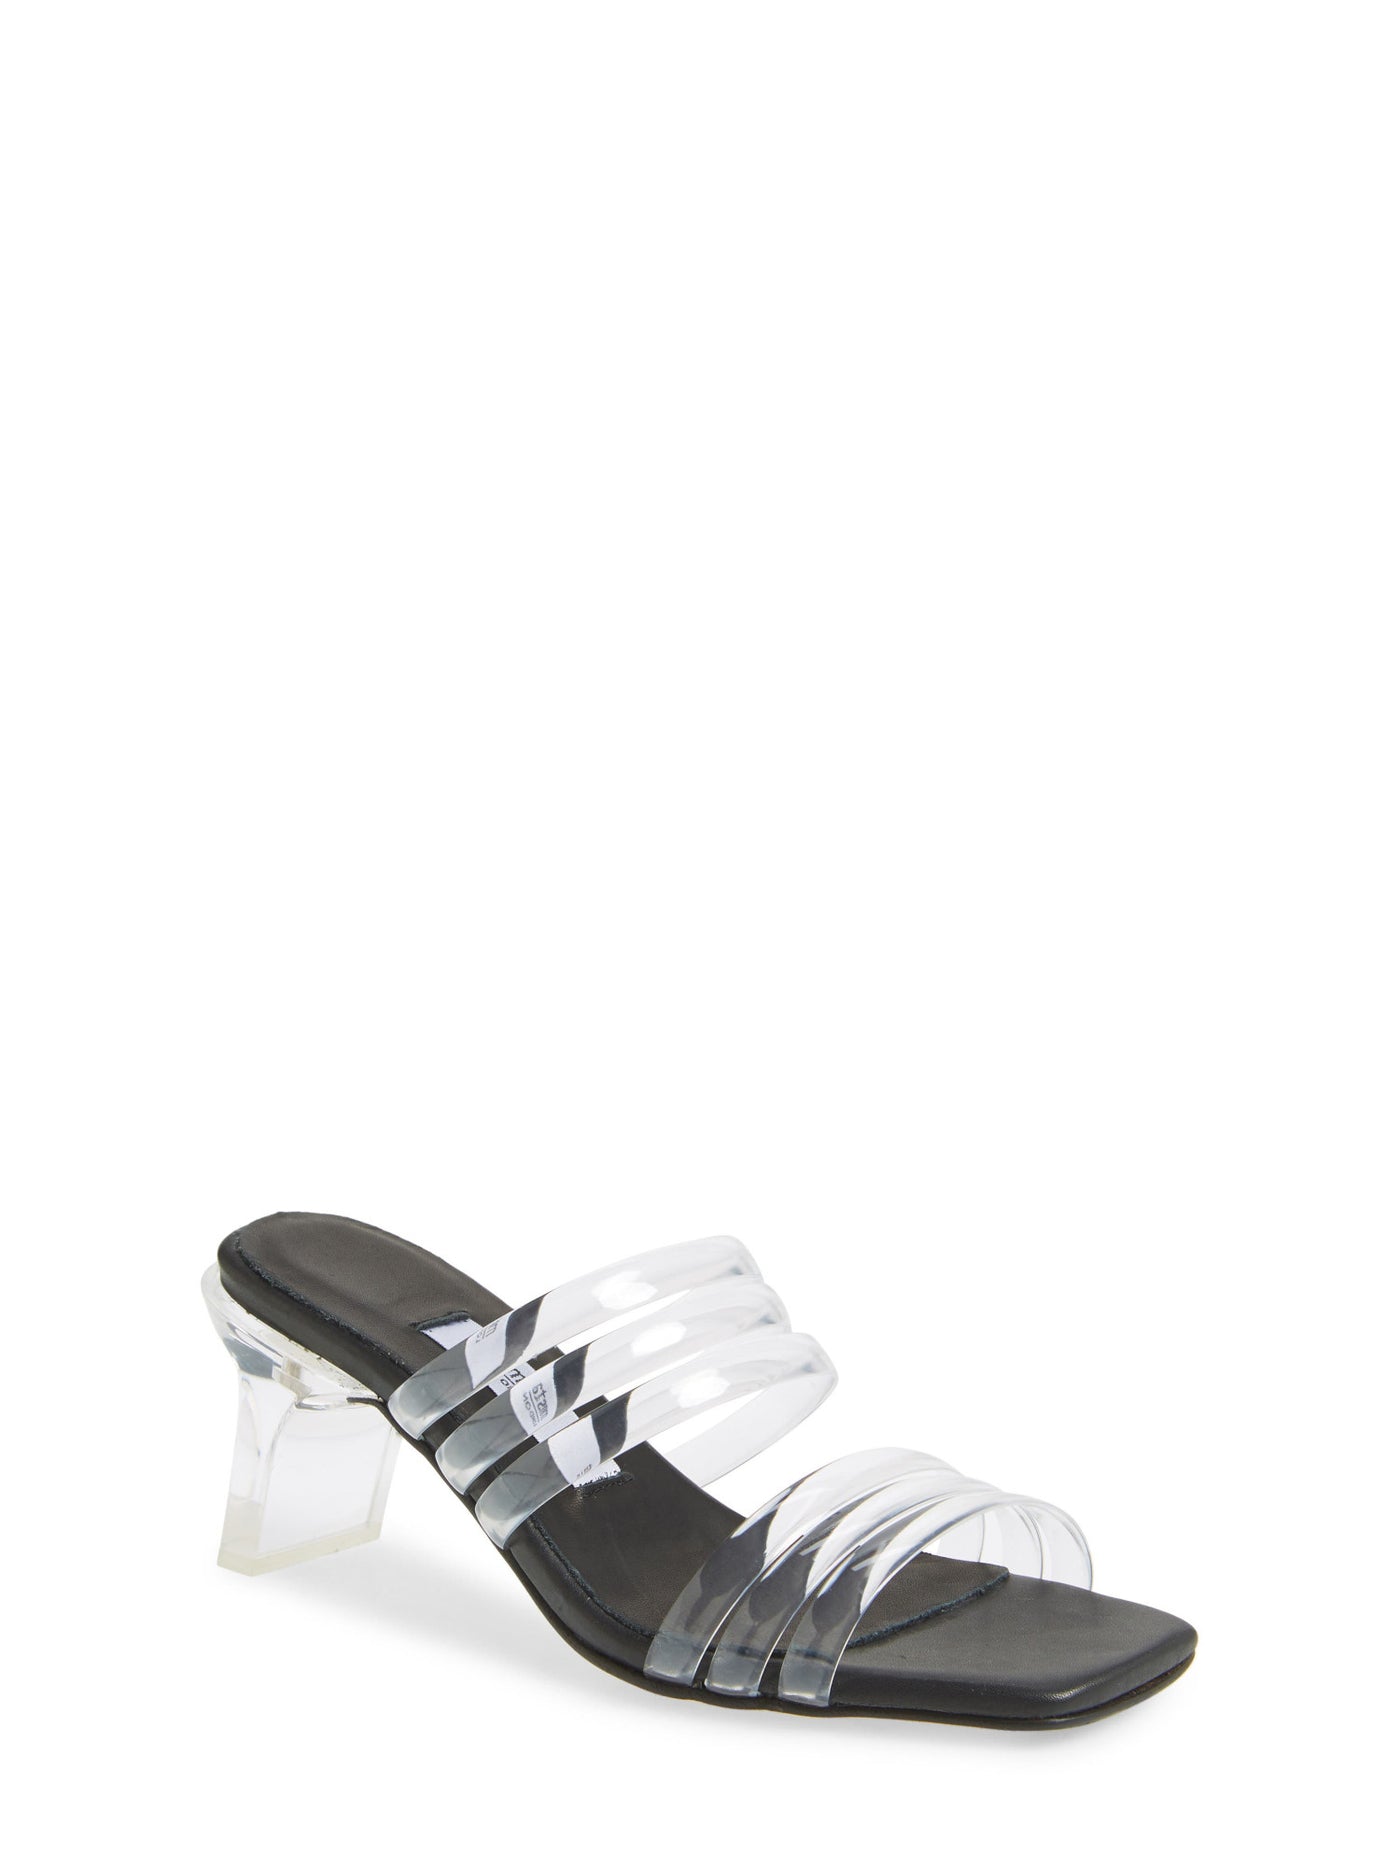 MISTA Womens Black Strappy Comfort Helena Square Toe Block Heel Slip On Leather Slide Sandals 38